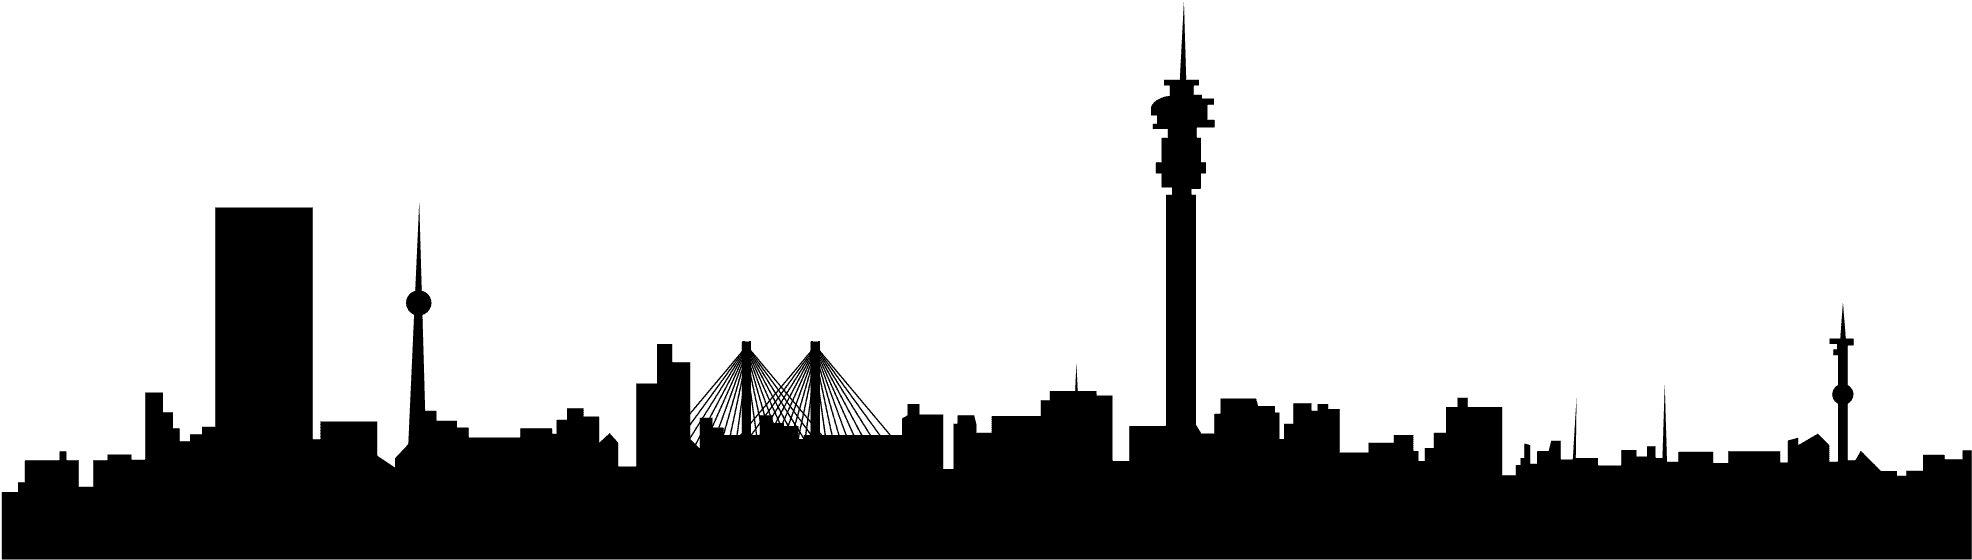 Johannesburg skyline in black and white